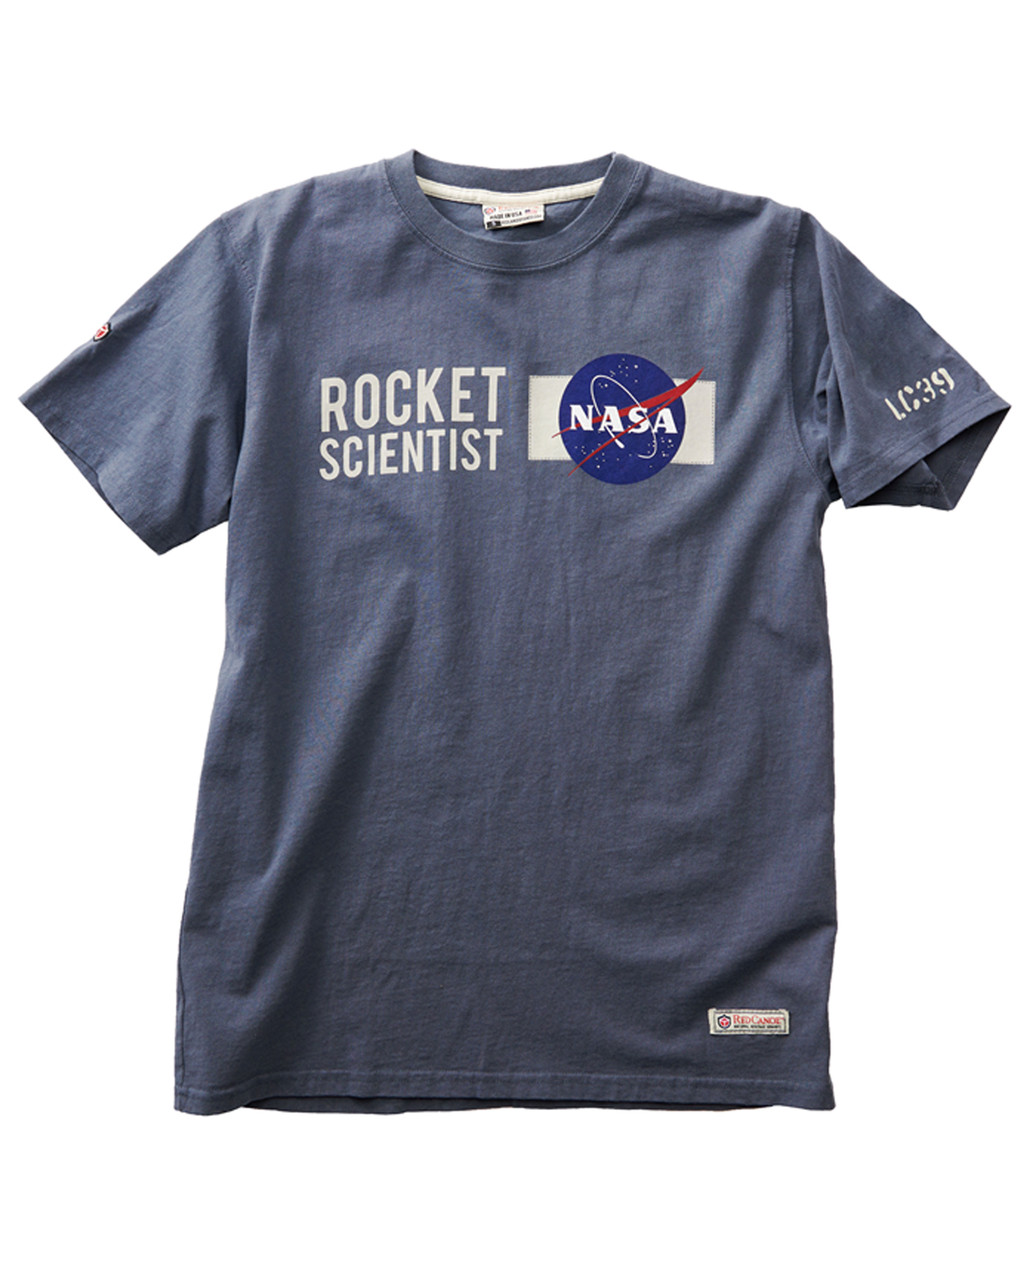 Large NASA Rocket Scientist T-Shirt